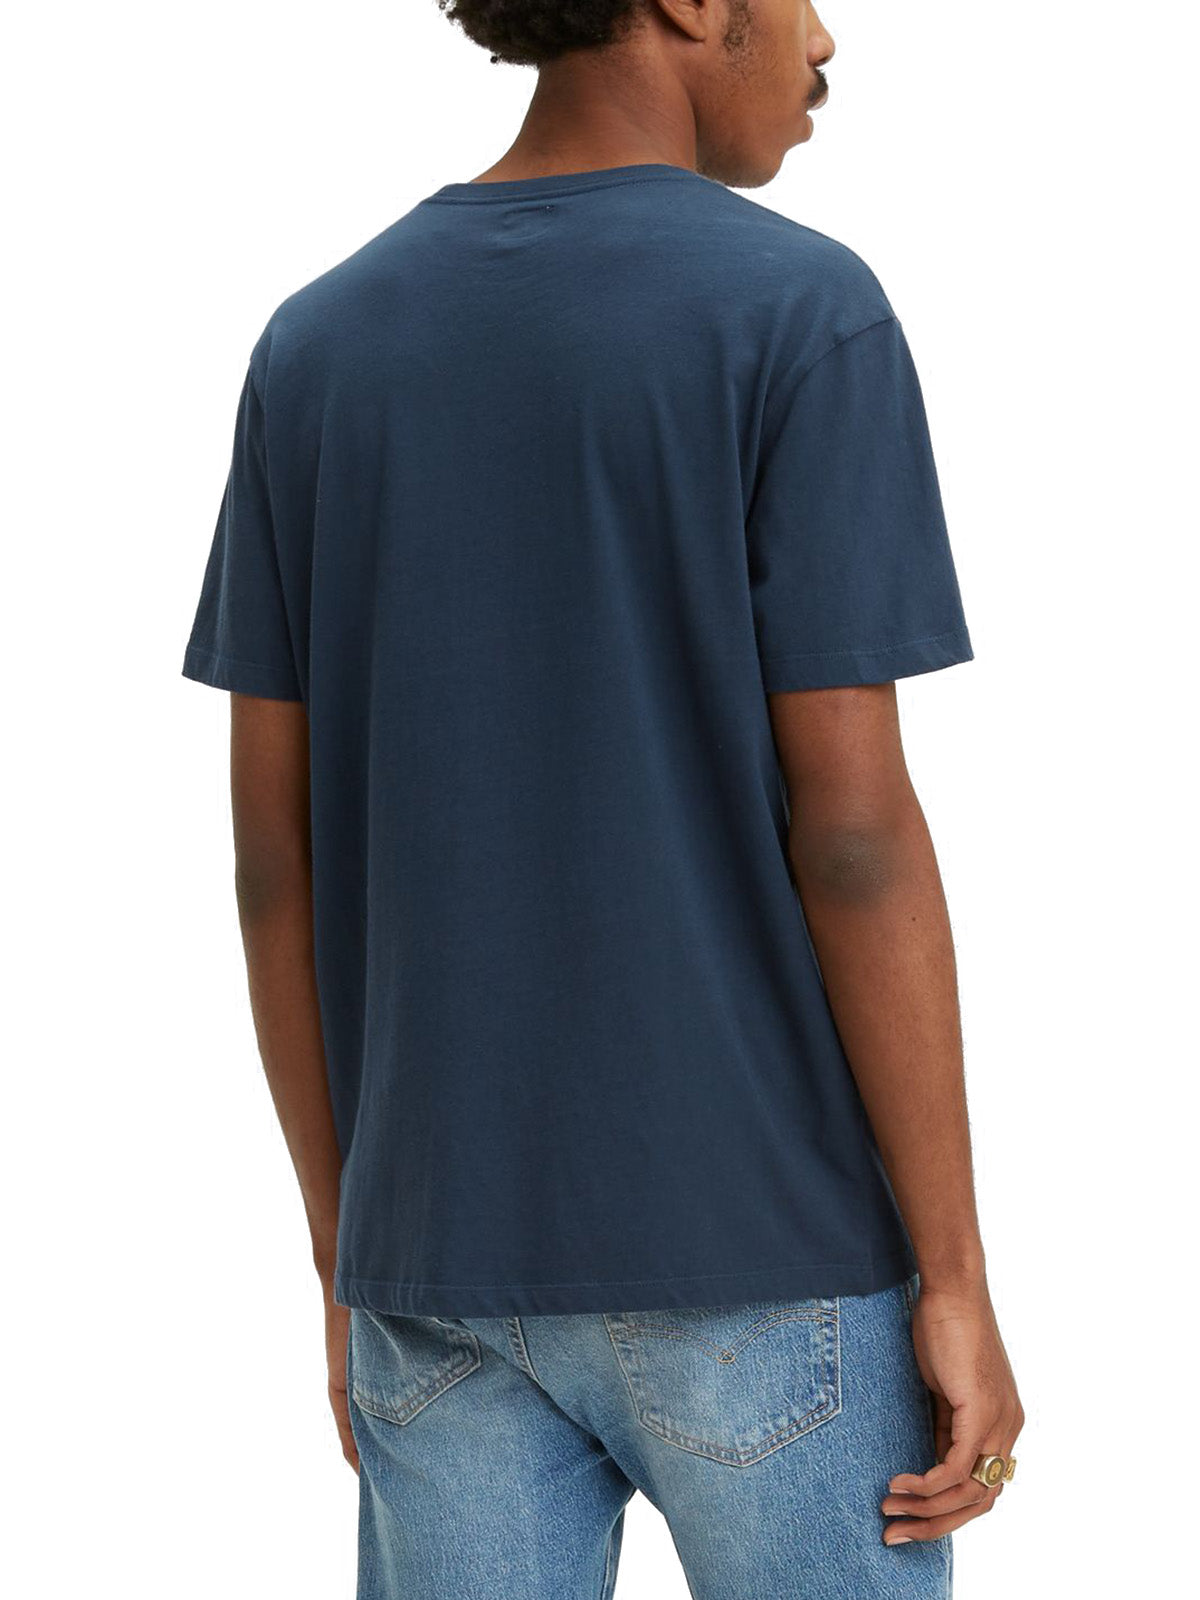 T-shirt Uomo Levi's - T-Shirt Housemark Original - Blu